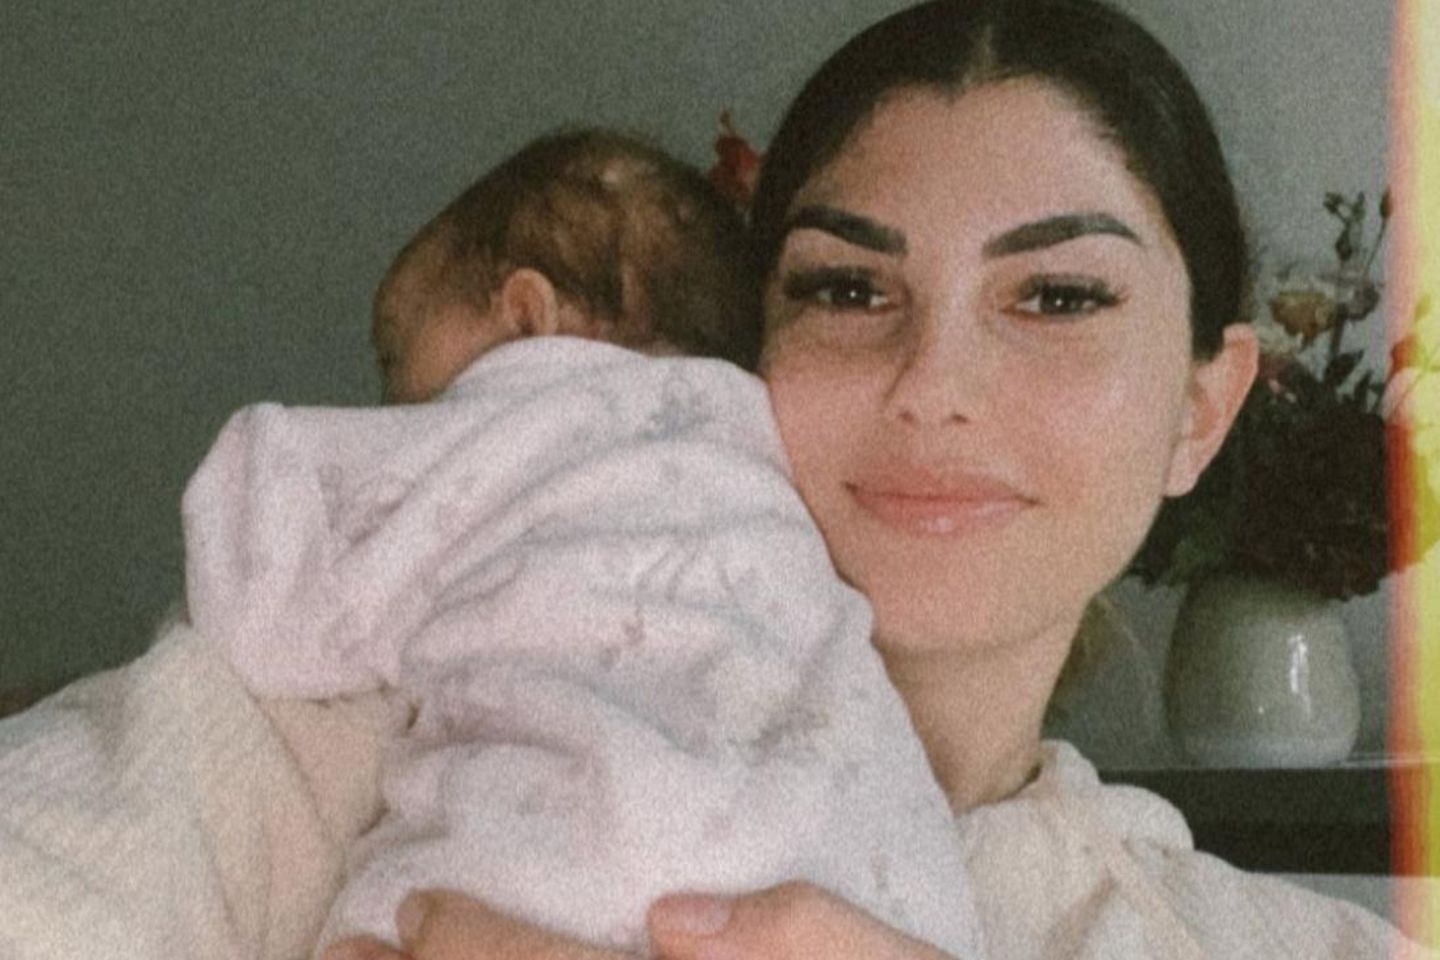 Yeliz Koc: Yeliz Koc auf Instagram mit Tochter Snow im Arm